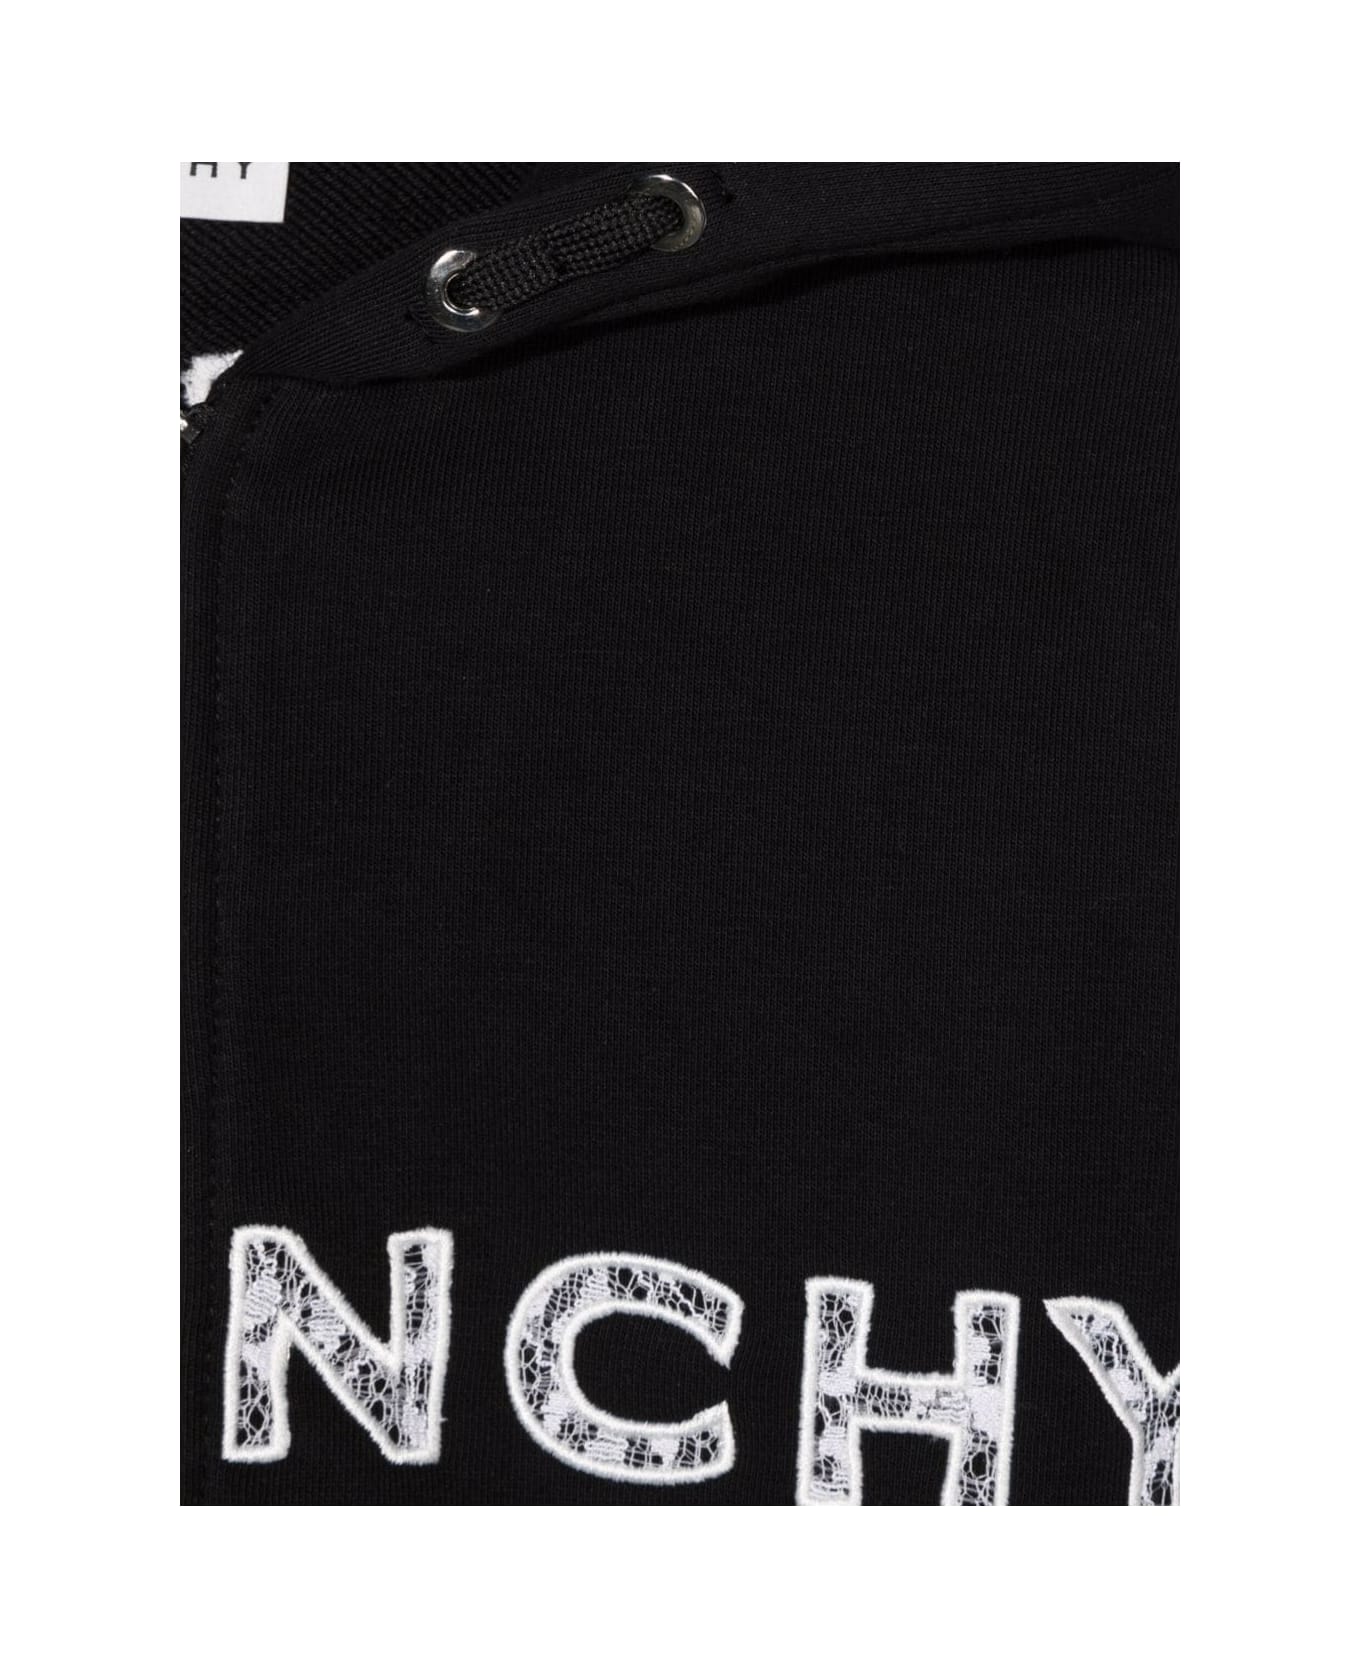 Givenchy Kids Boy's Black Cotton Hoodie With Logo - Black